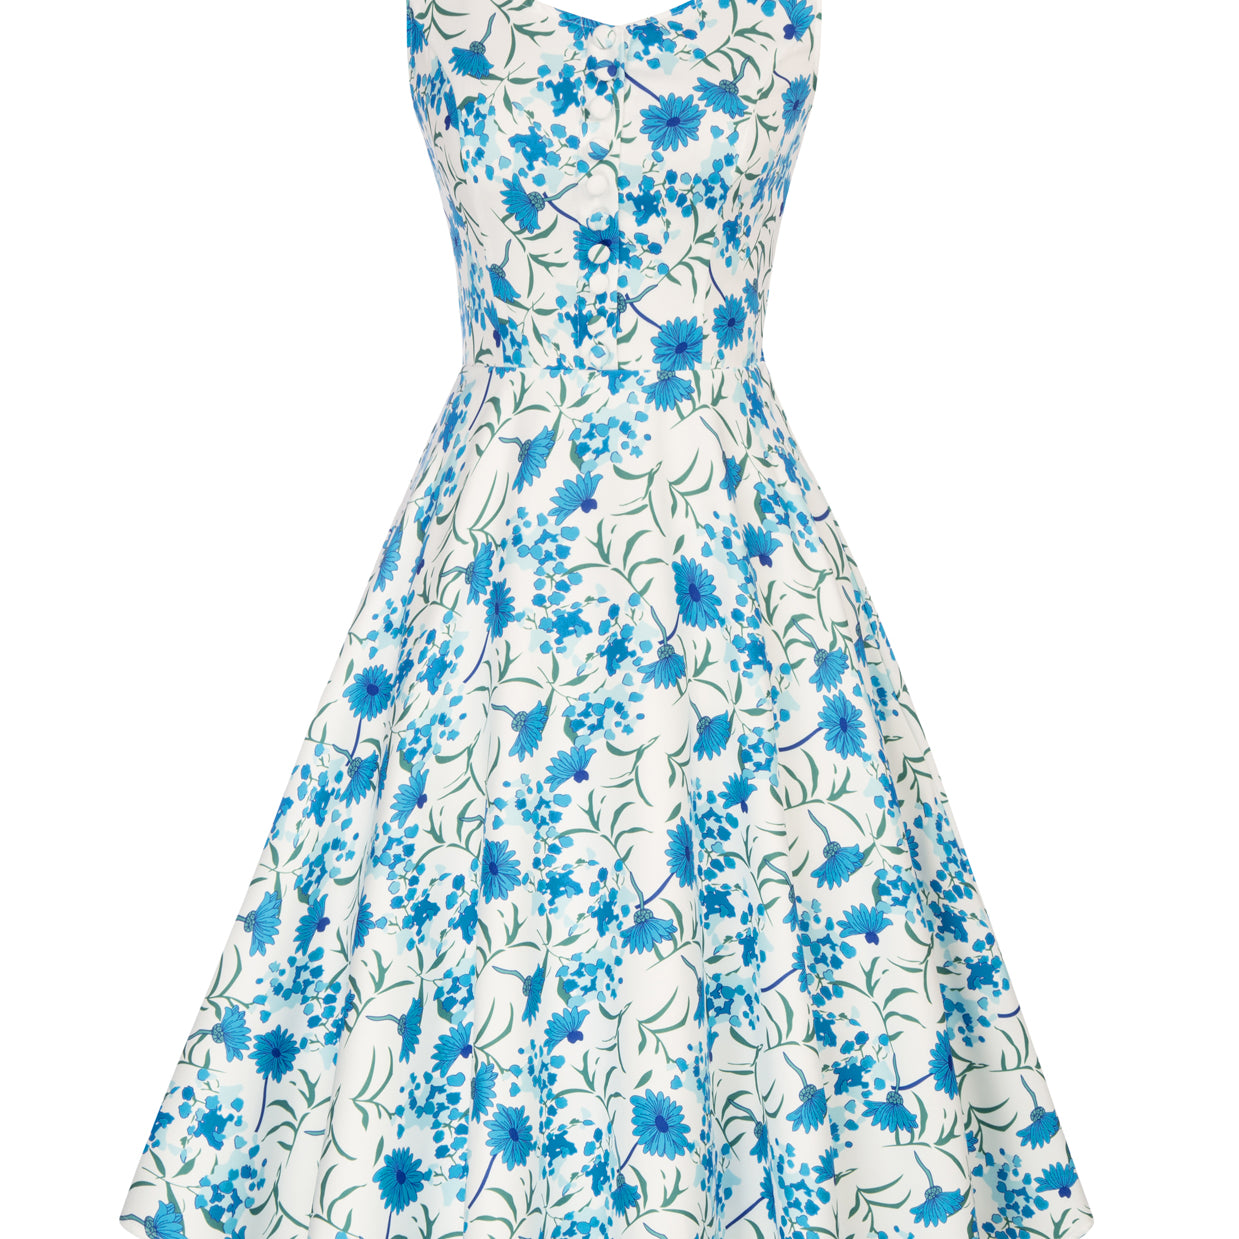 1950s Vintage Floral Printed Sleeveless A-Line Dress